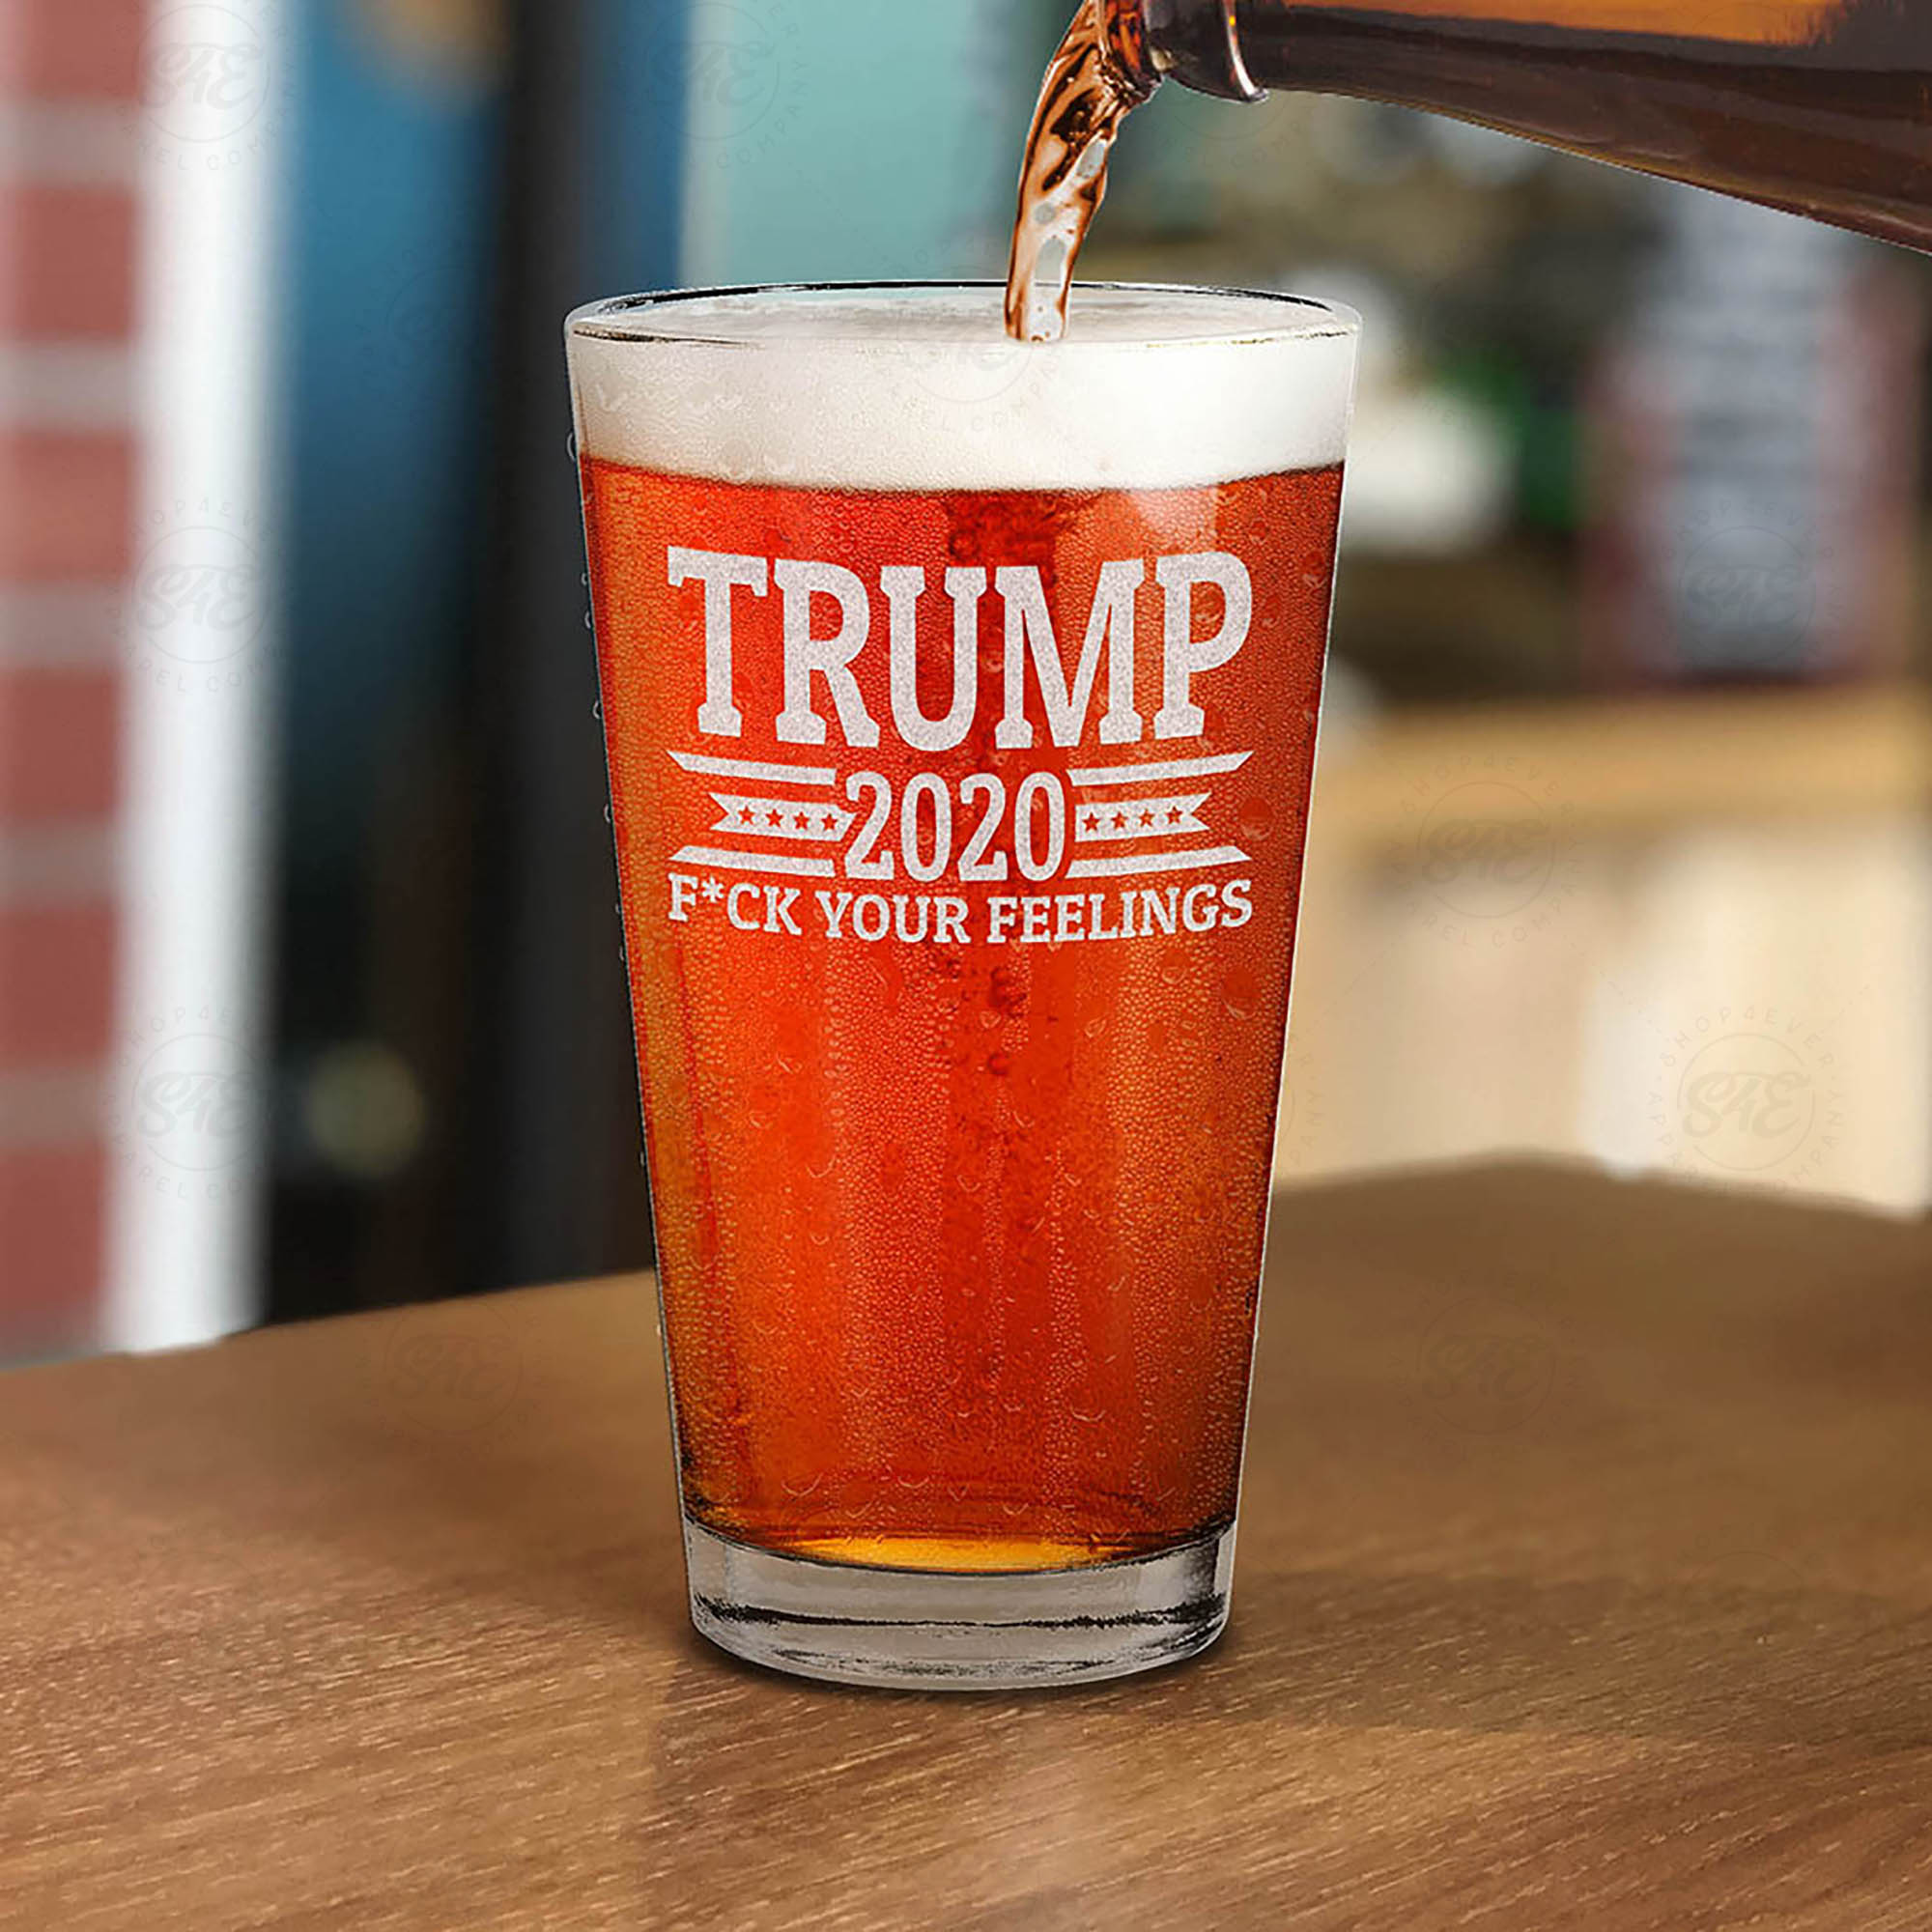 Trump 2020 Fck Your Feelings Banner Laser Engraved Beer Pint Glass